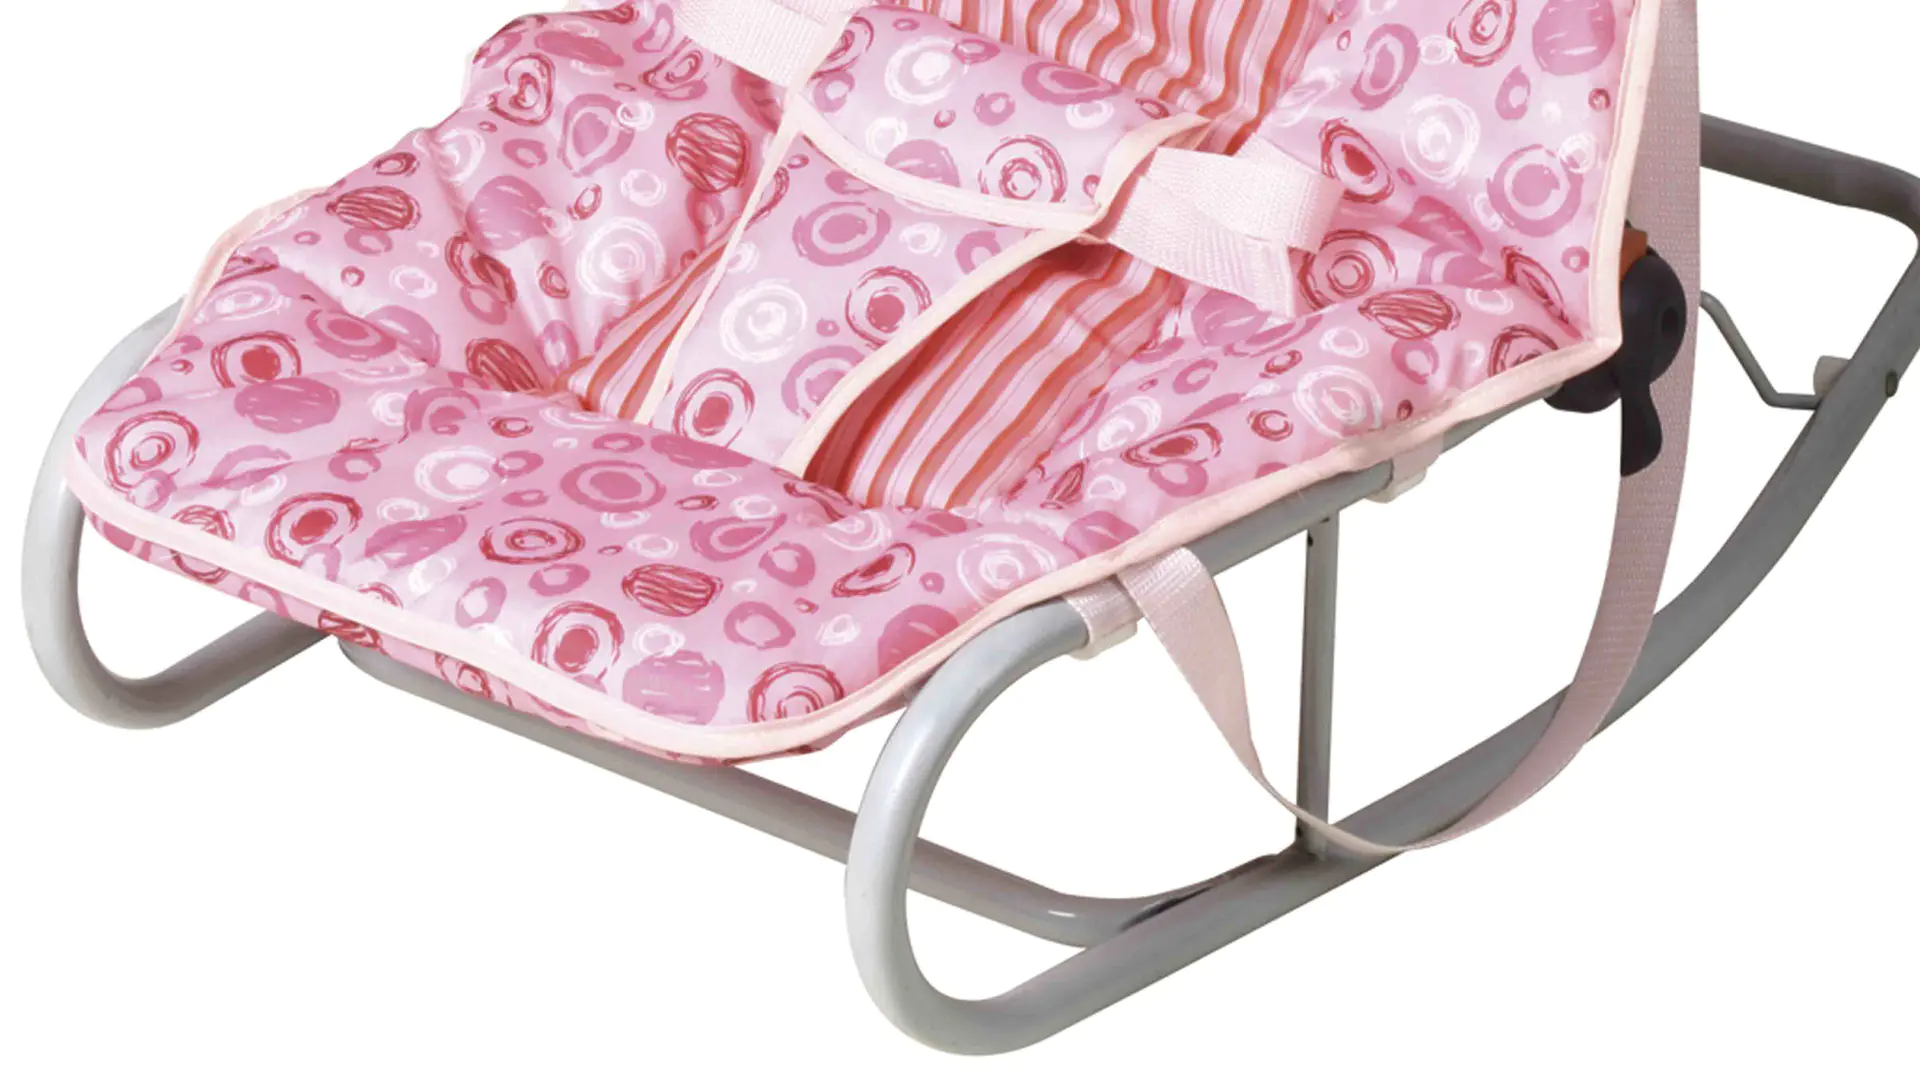 Simple Baby rocker chair 332